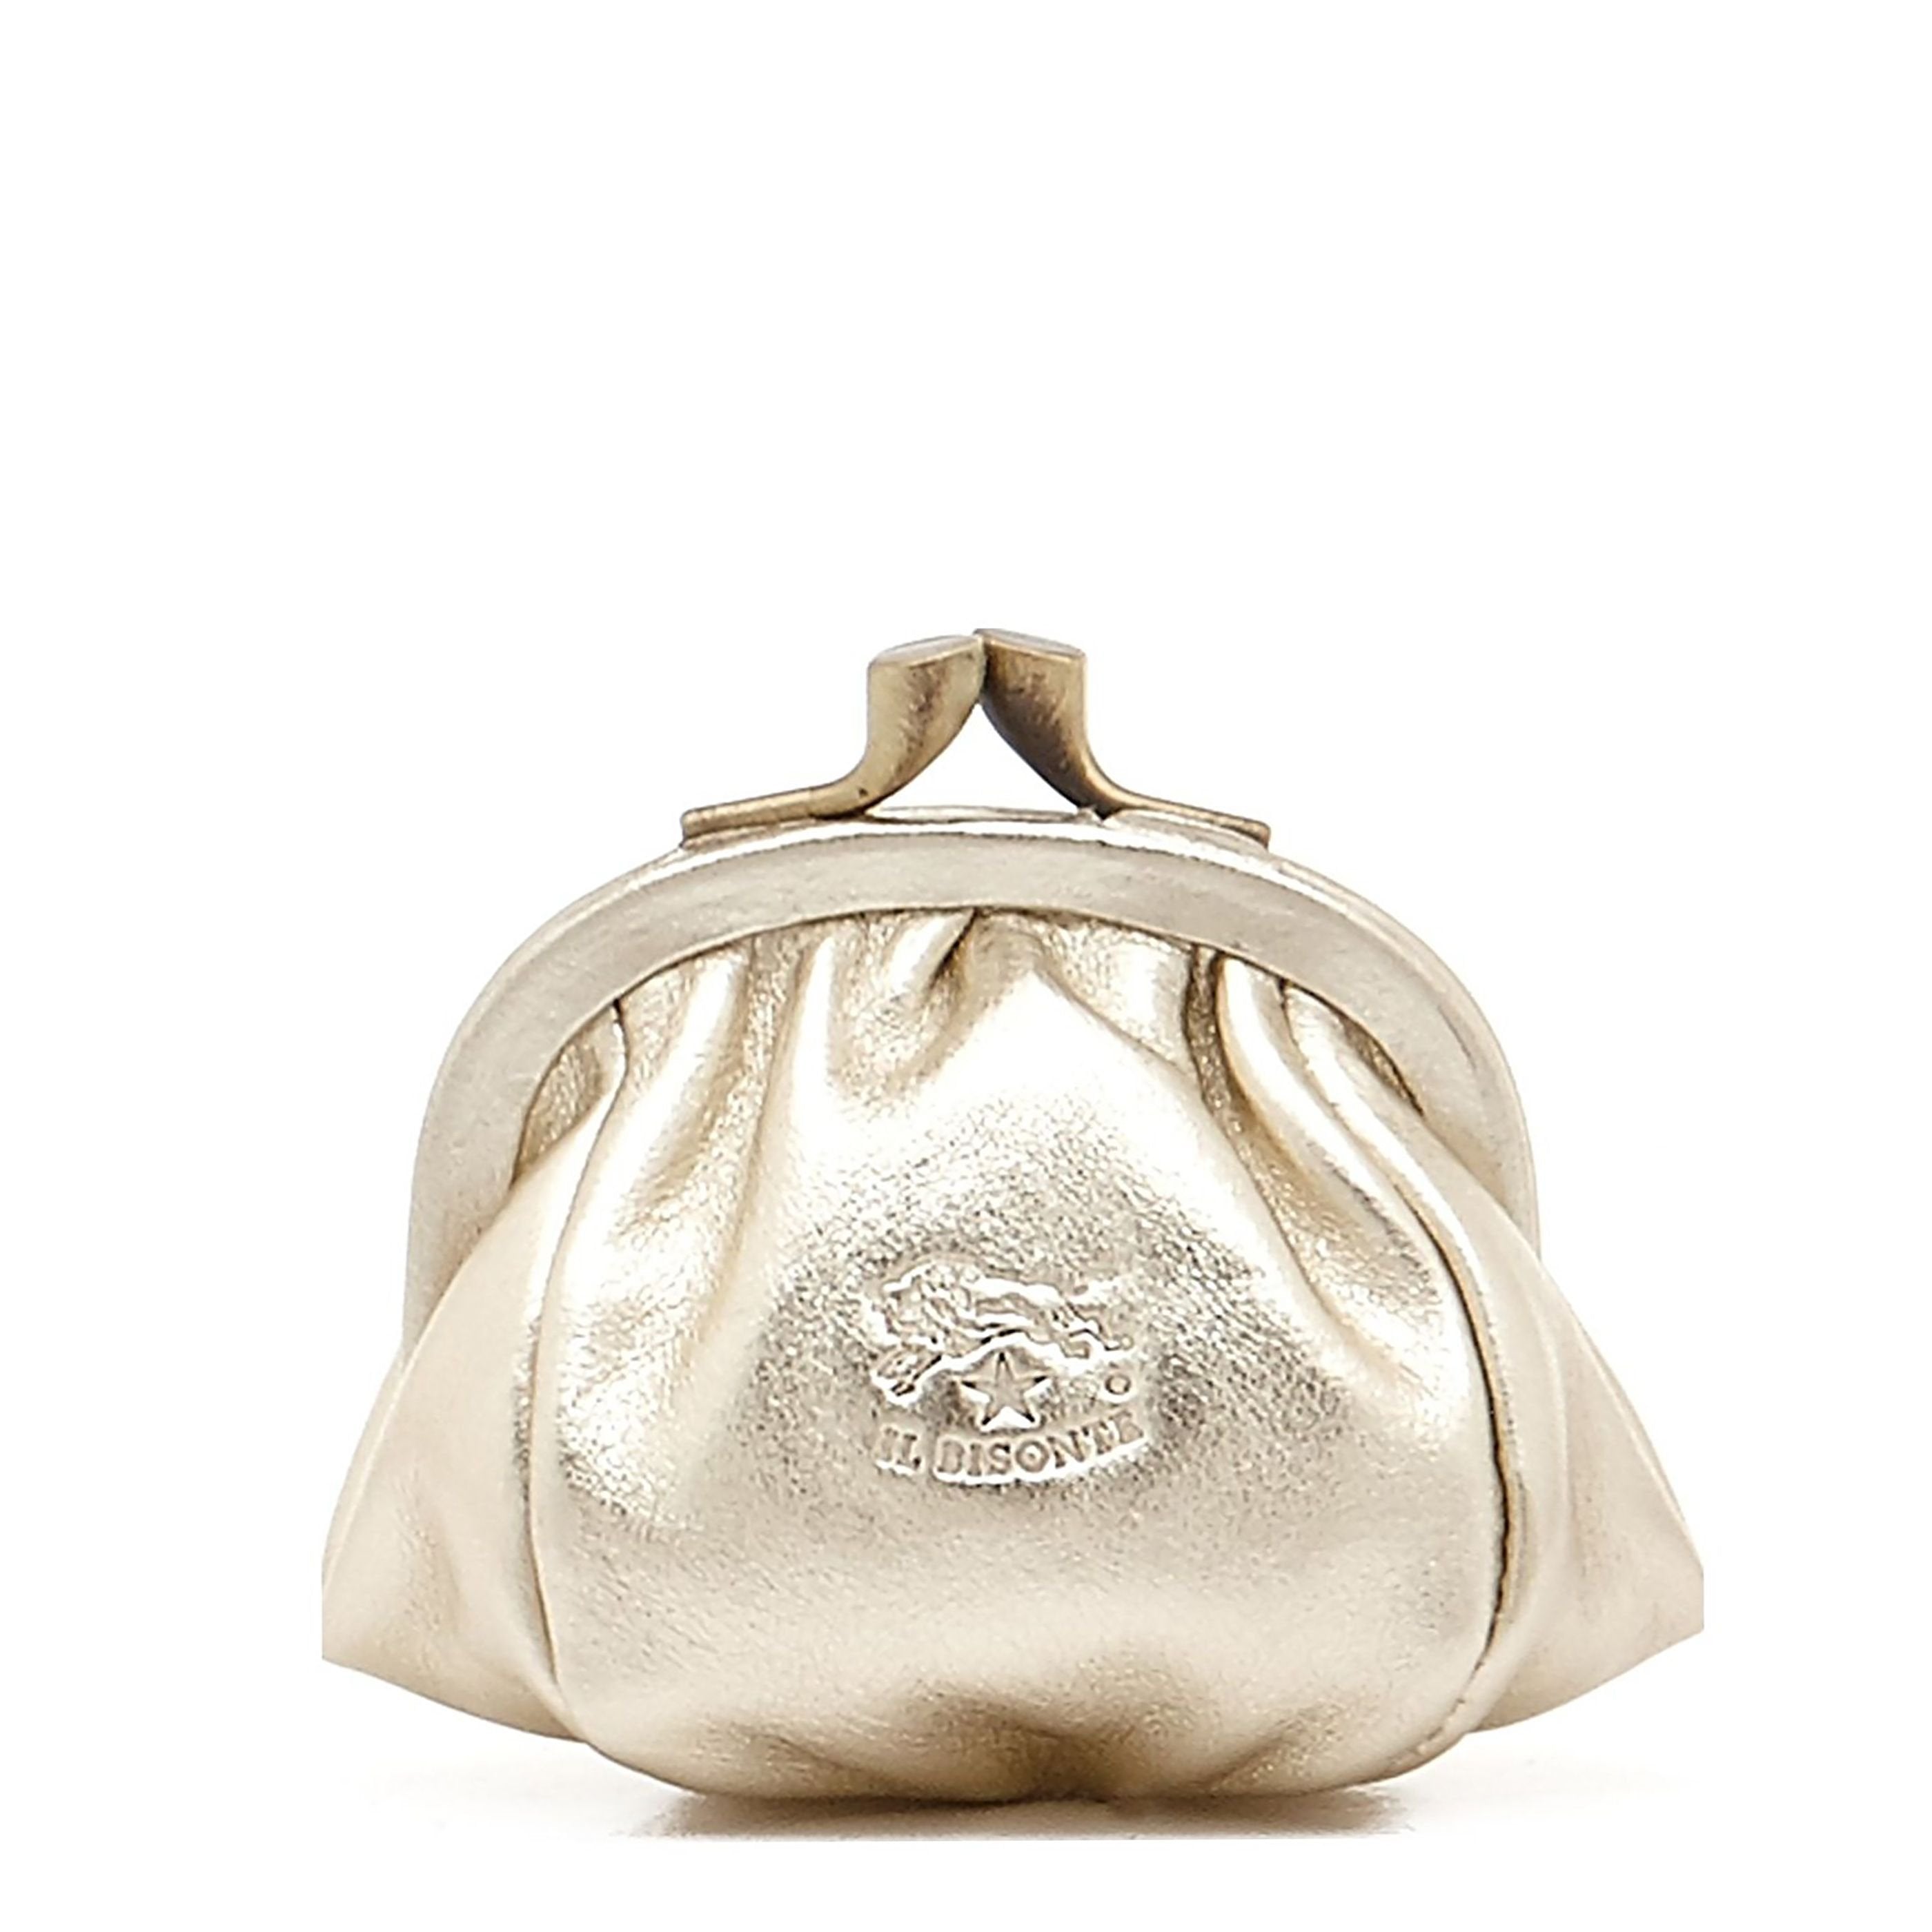 Women's coin purse in metallic leather color metallic silver – Il